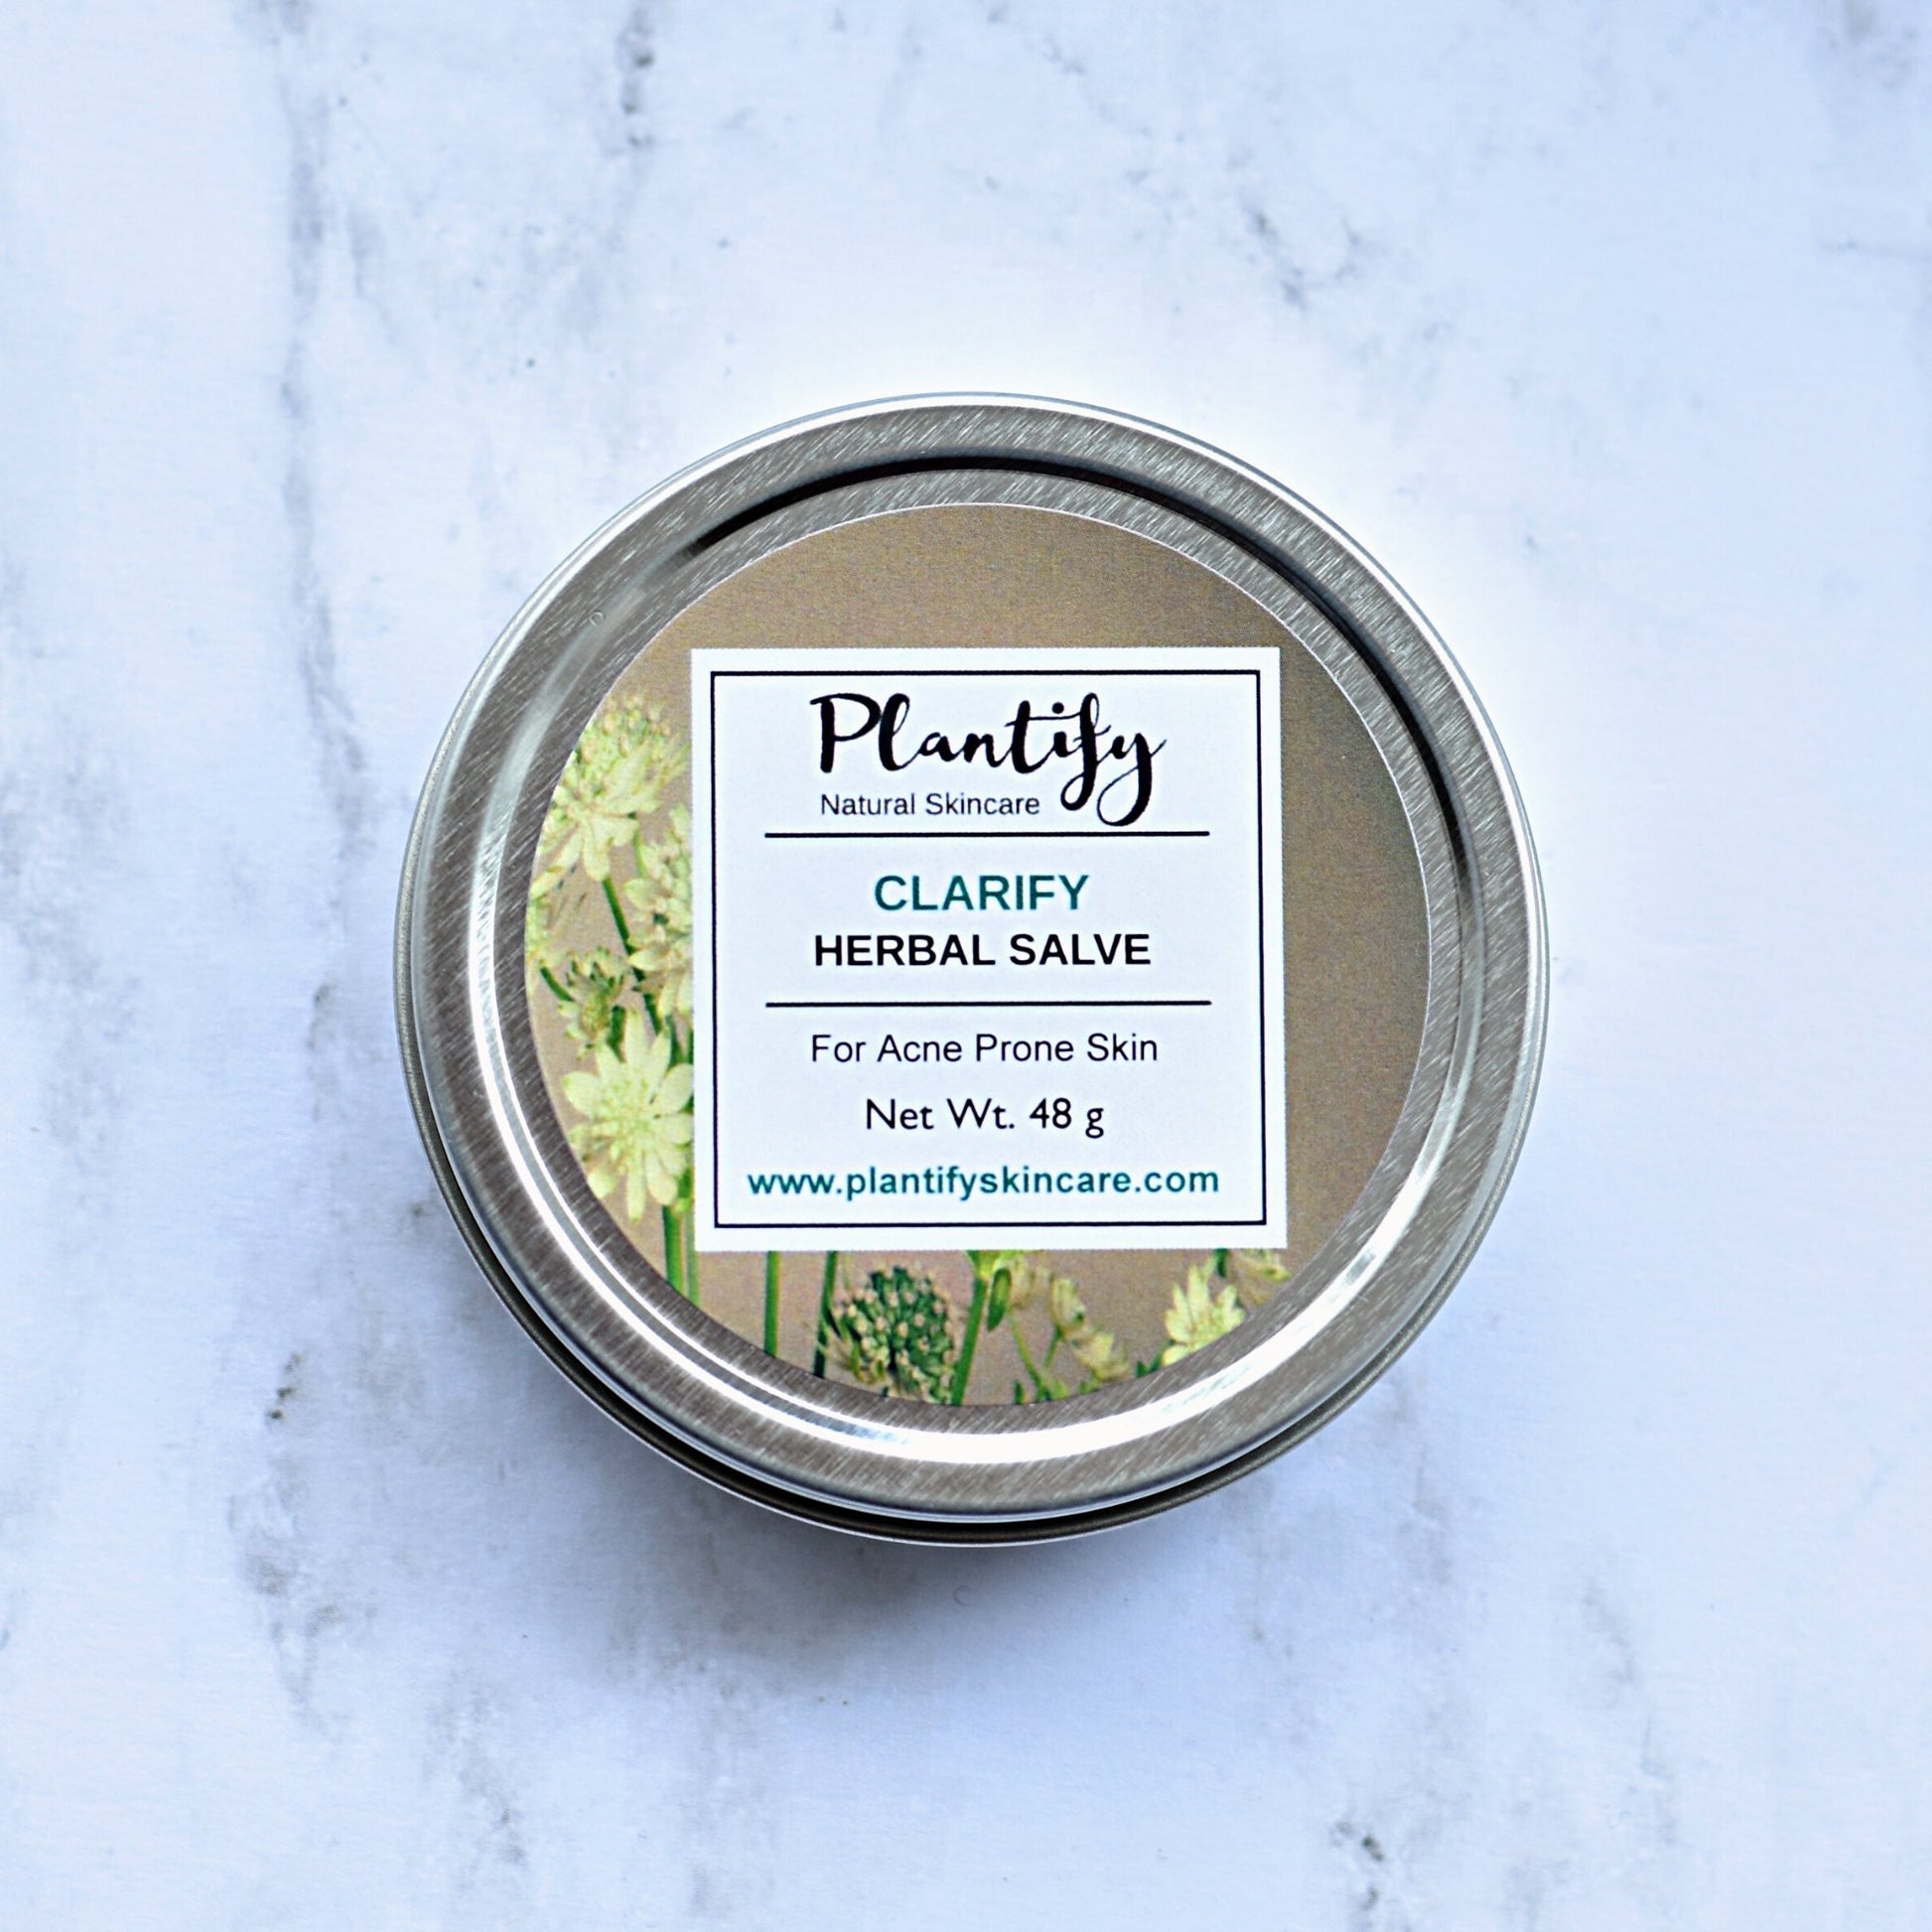 Clarify Herbal Salve - Plantify Natural Skincare